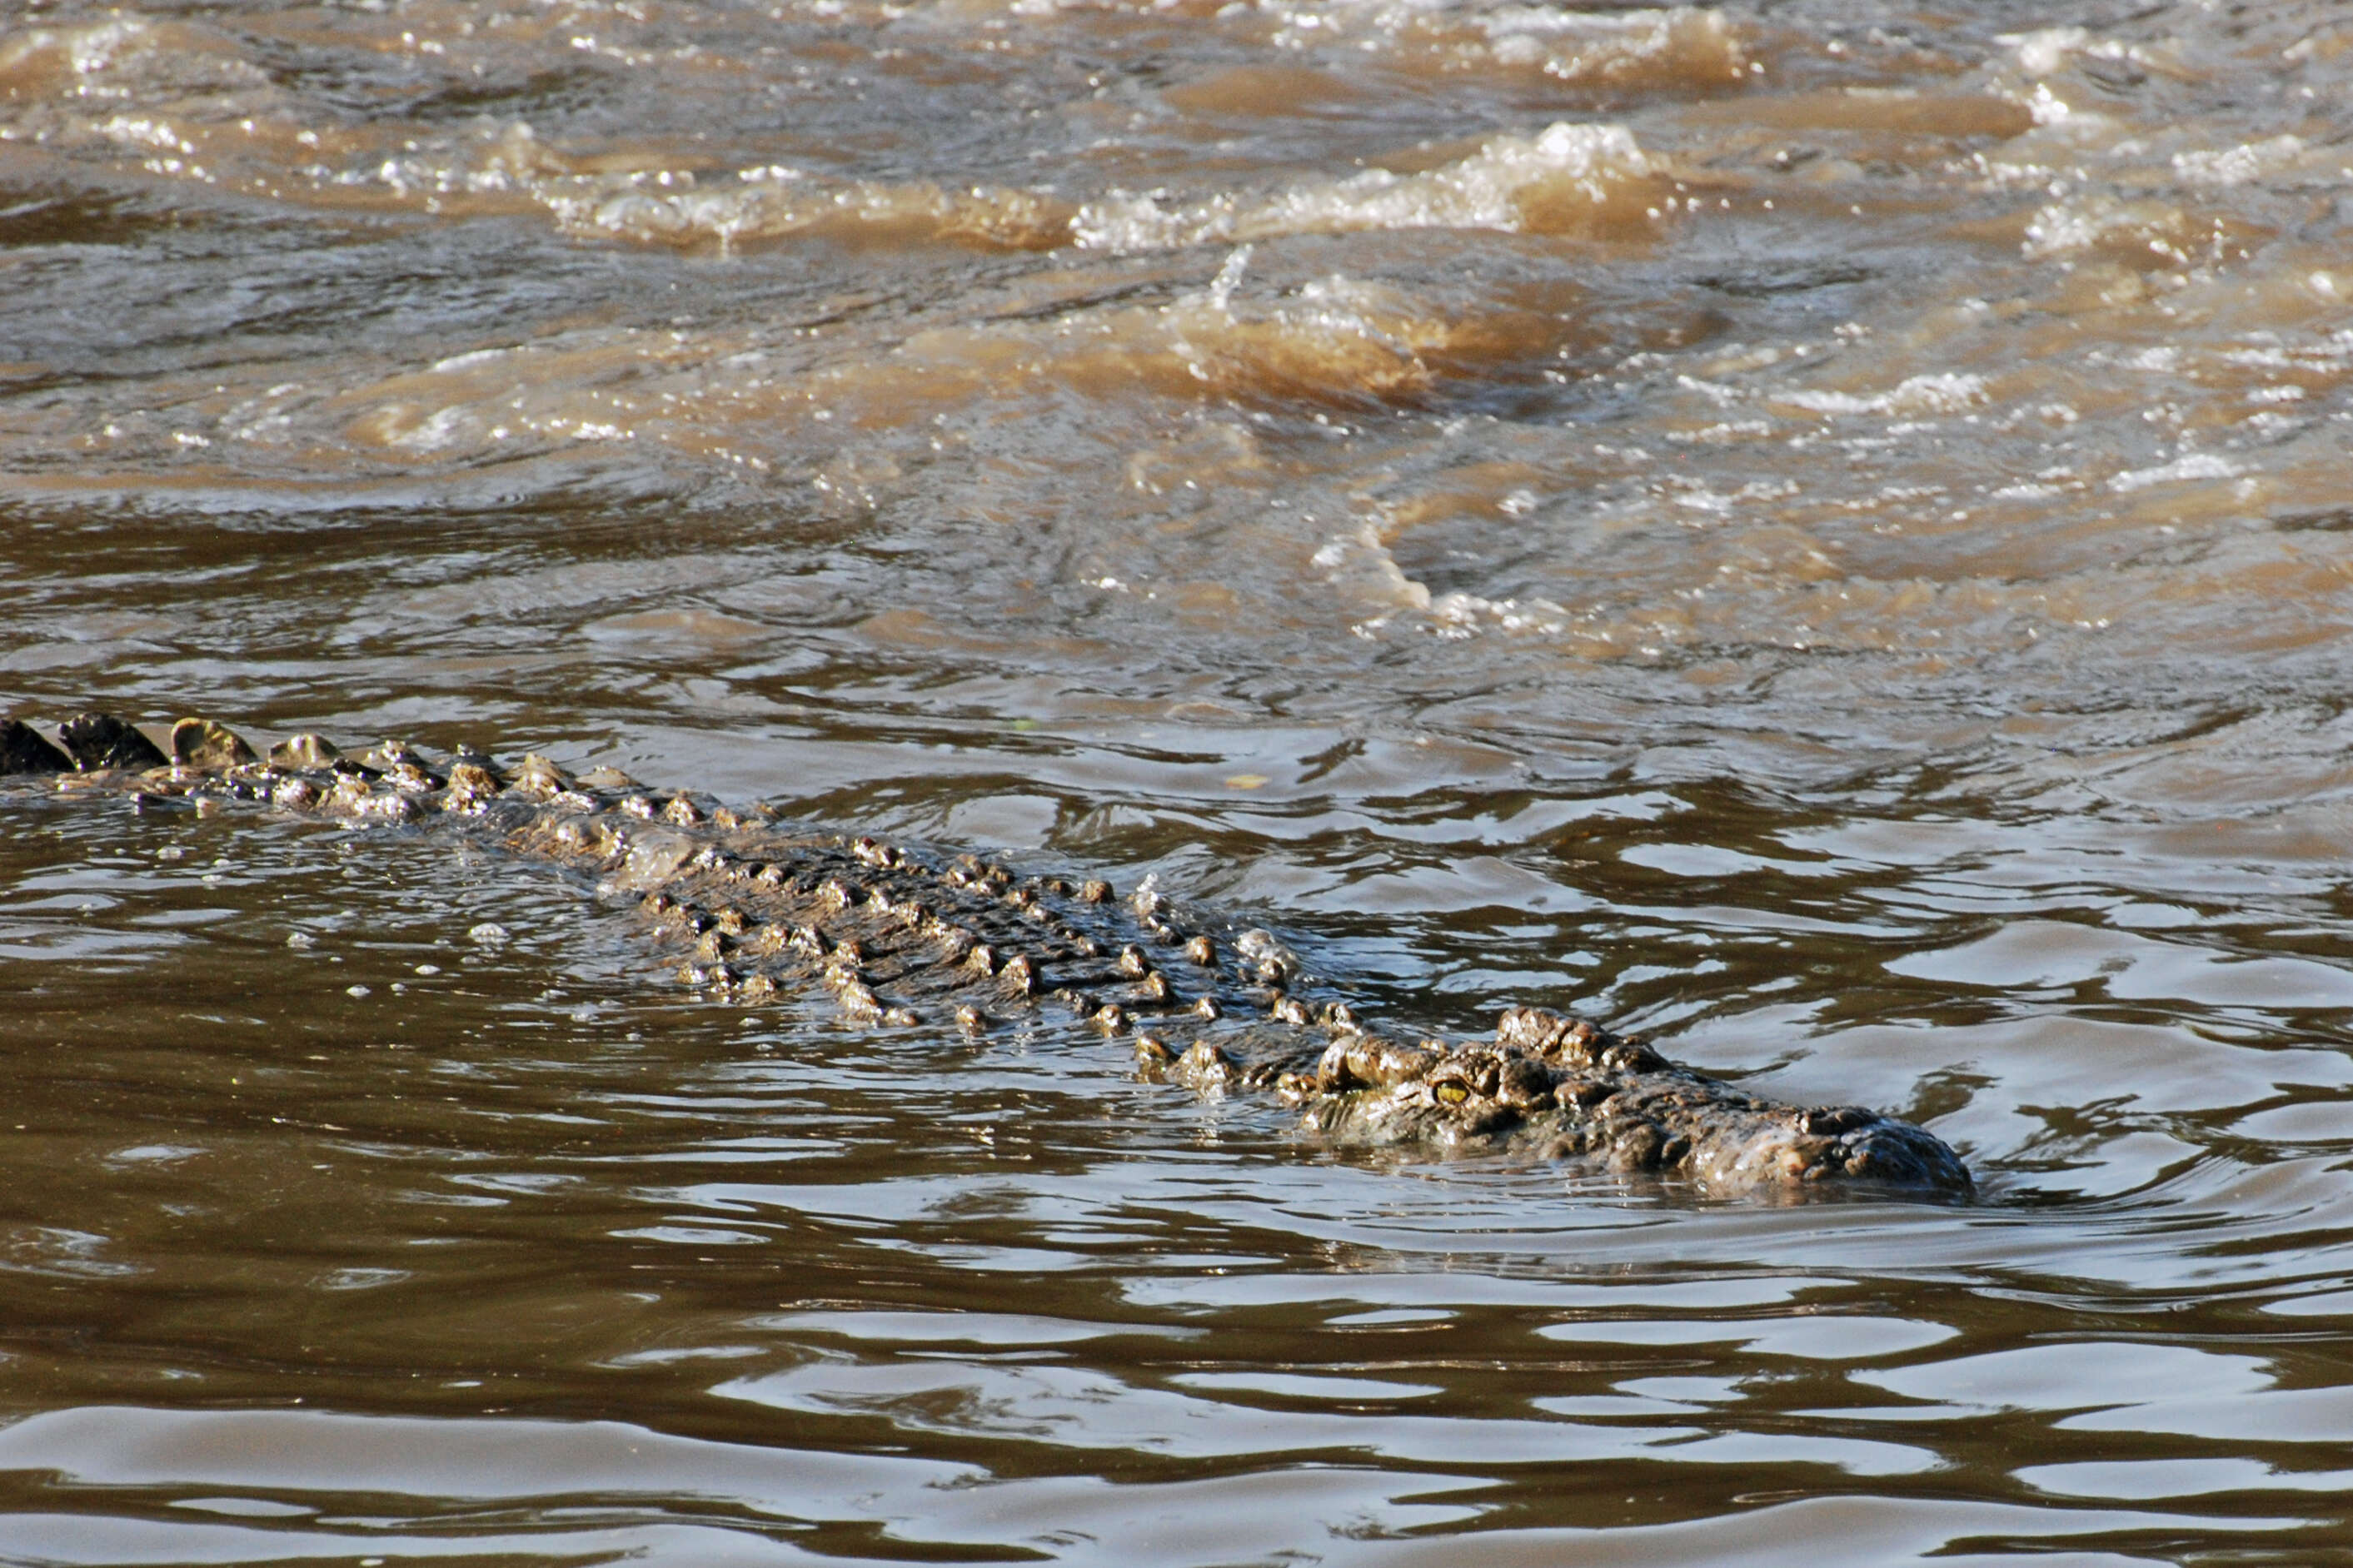 Image of Nile crocodile